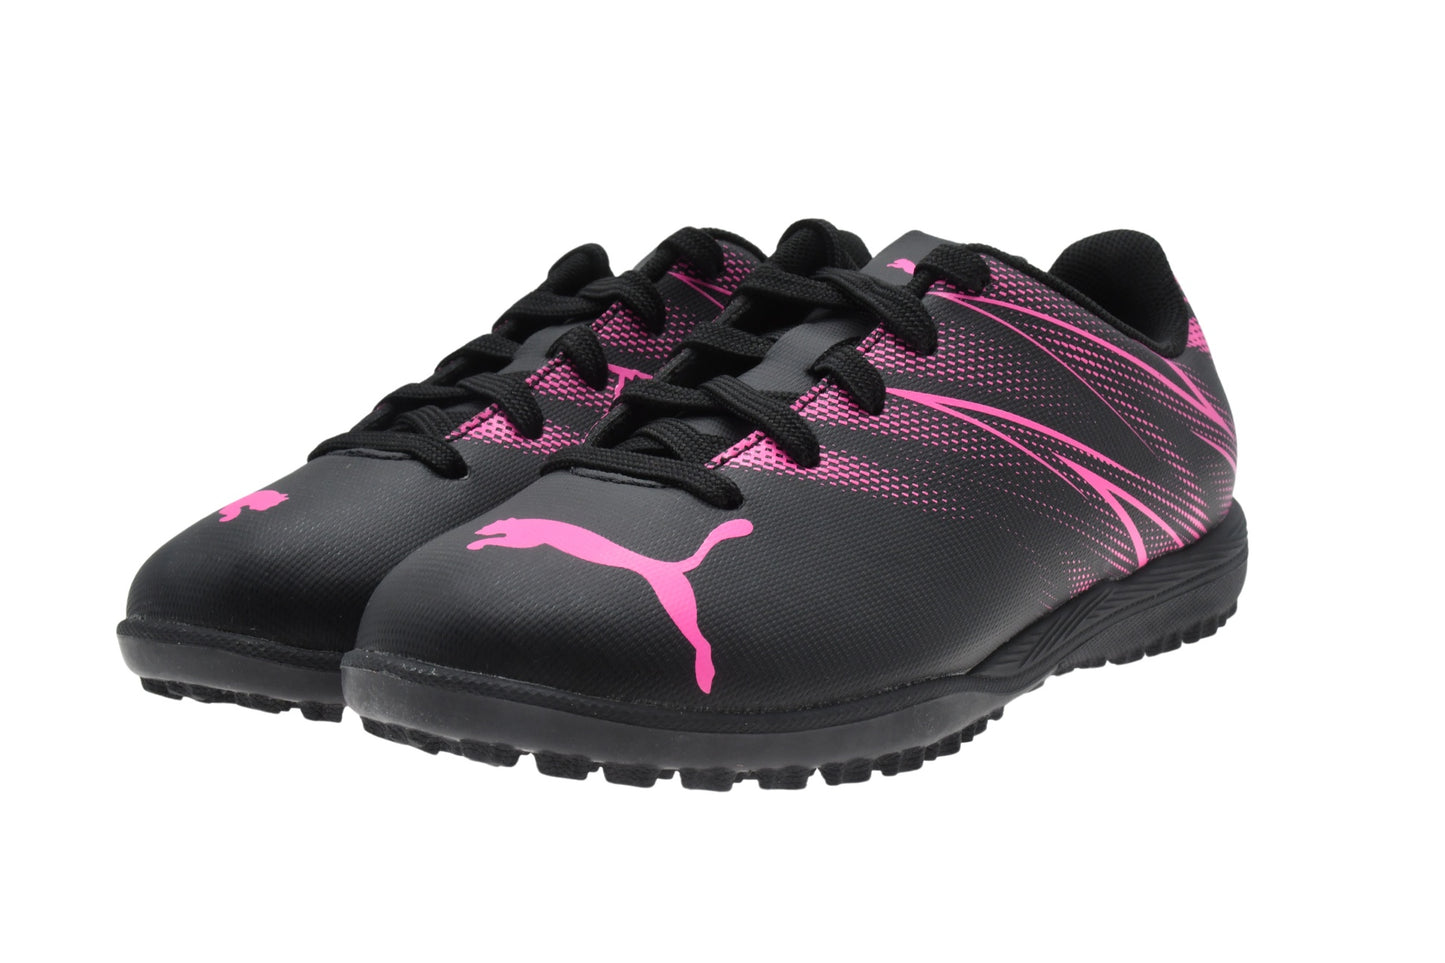 Puma Attacanto TT Football Boots - 9 - Black/Pink